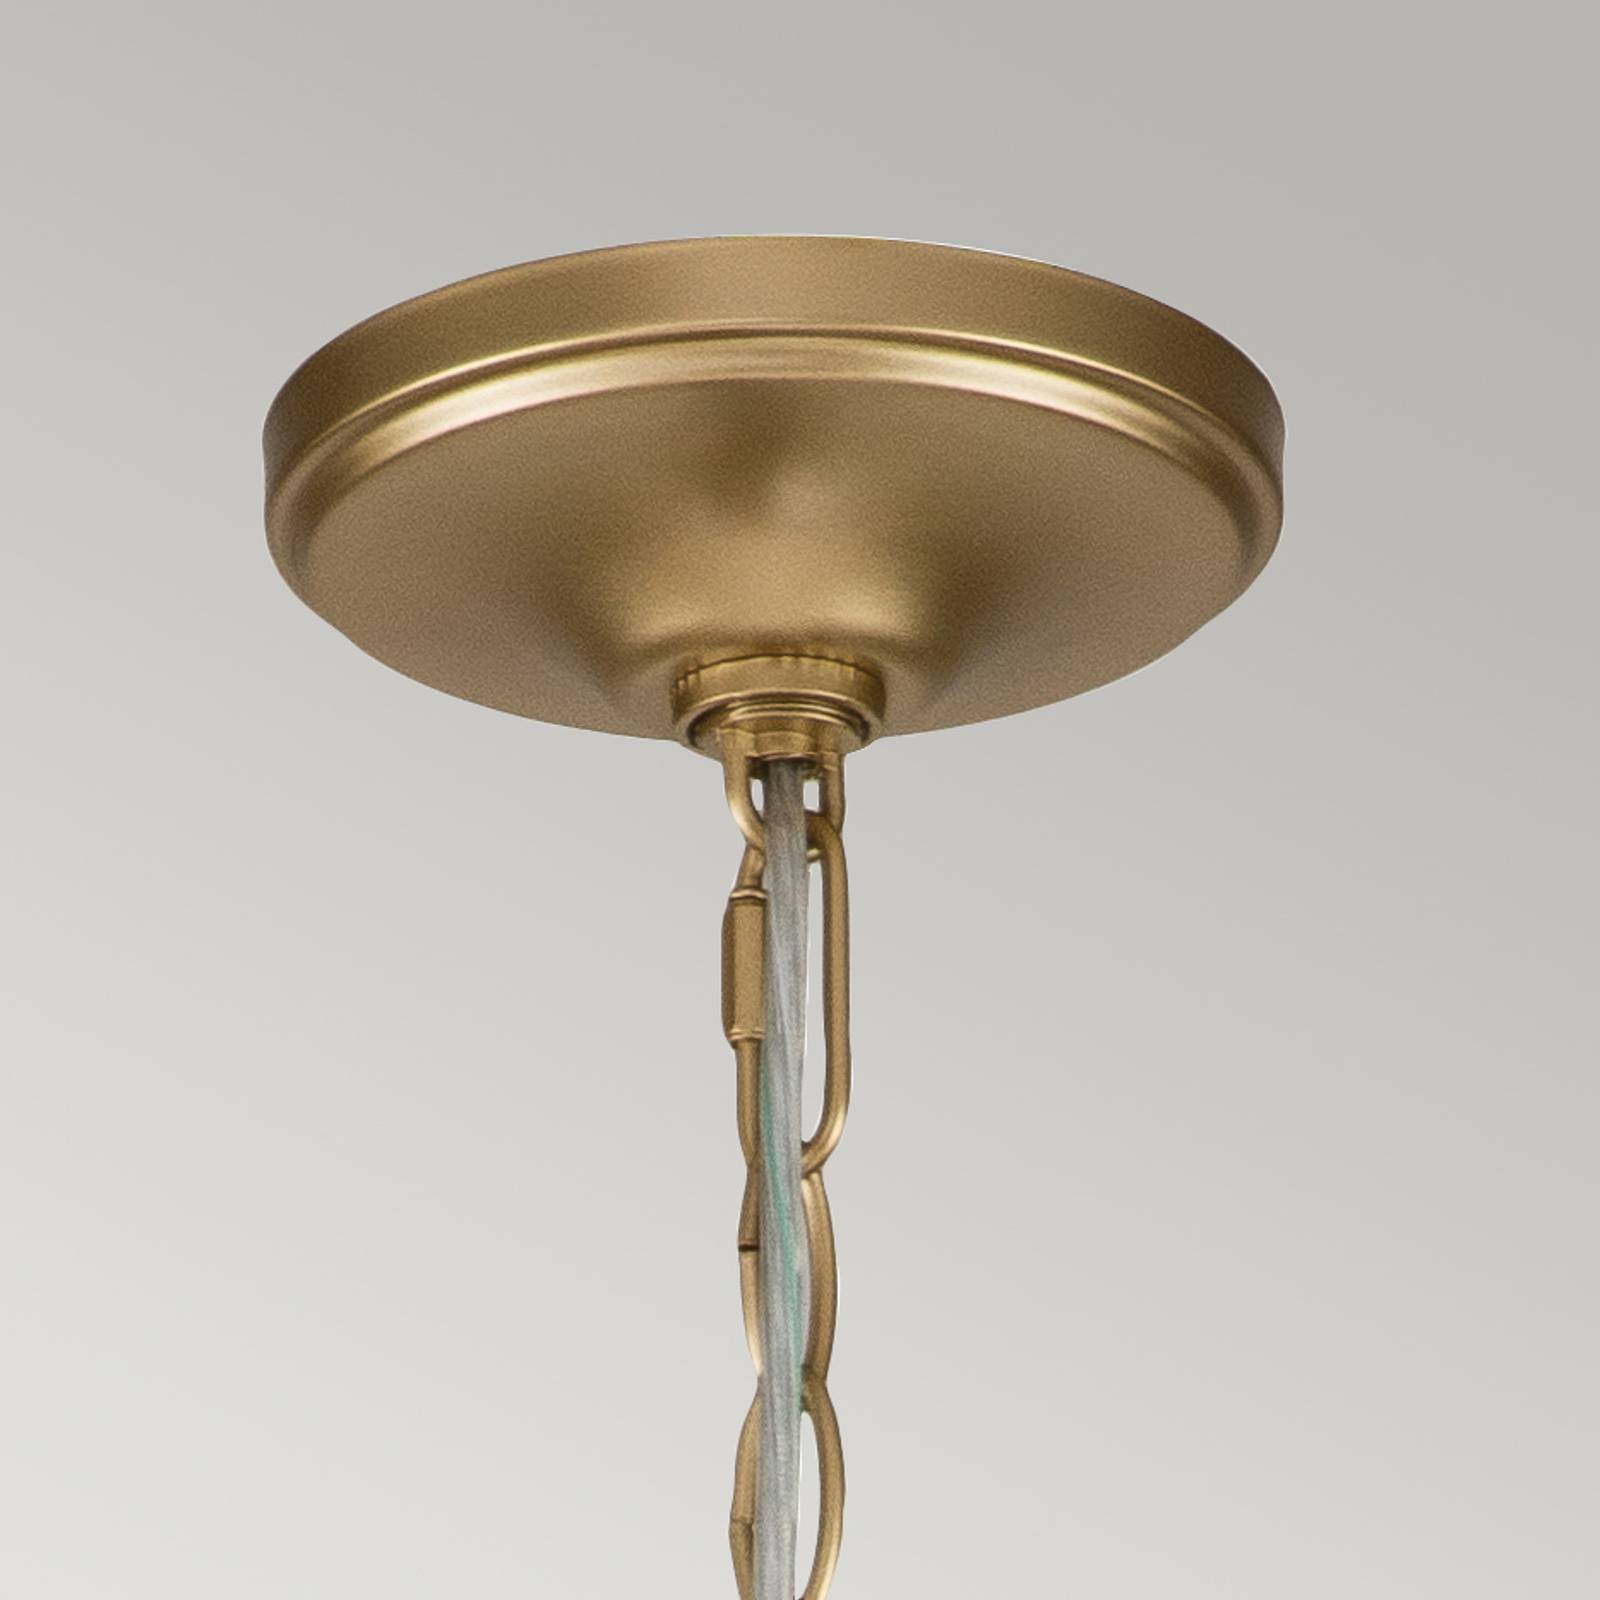 KICHLER Capitol Hill chandelier, 12-bulb, brass